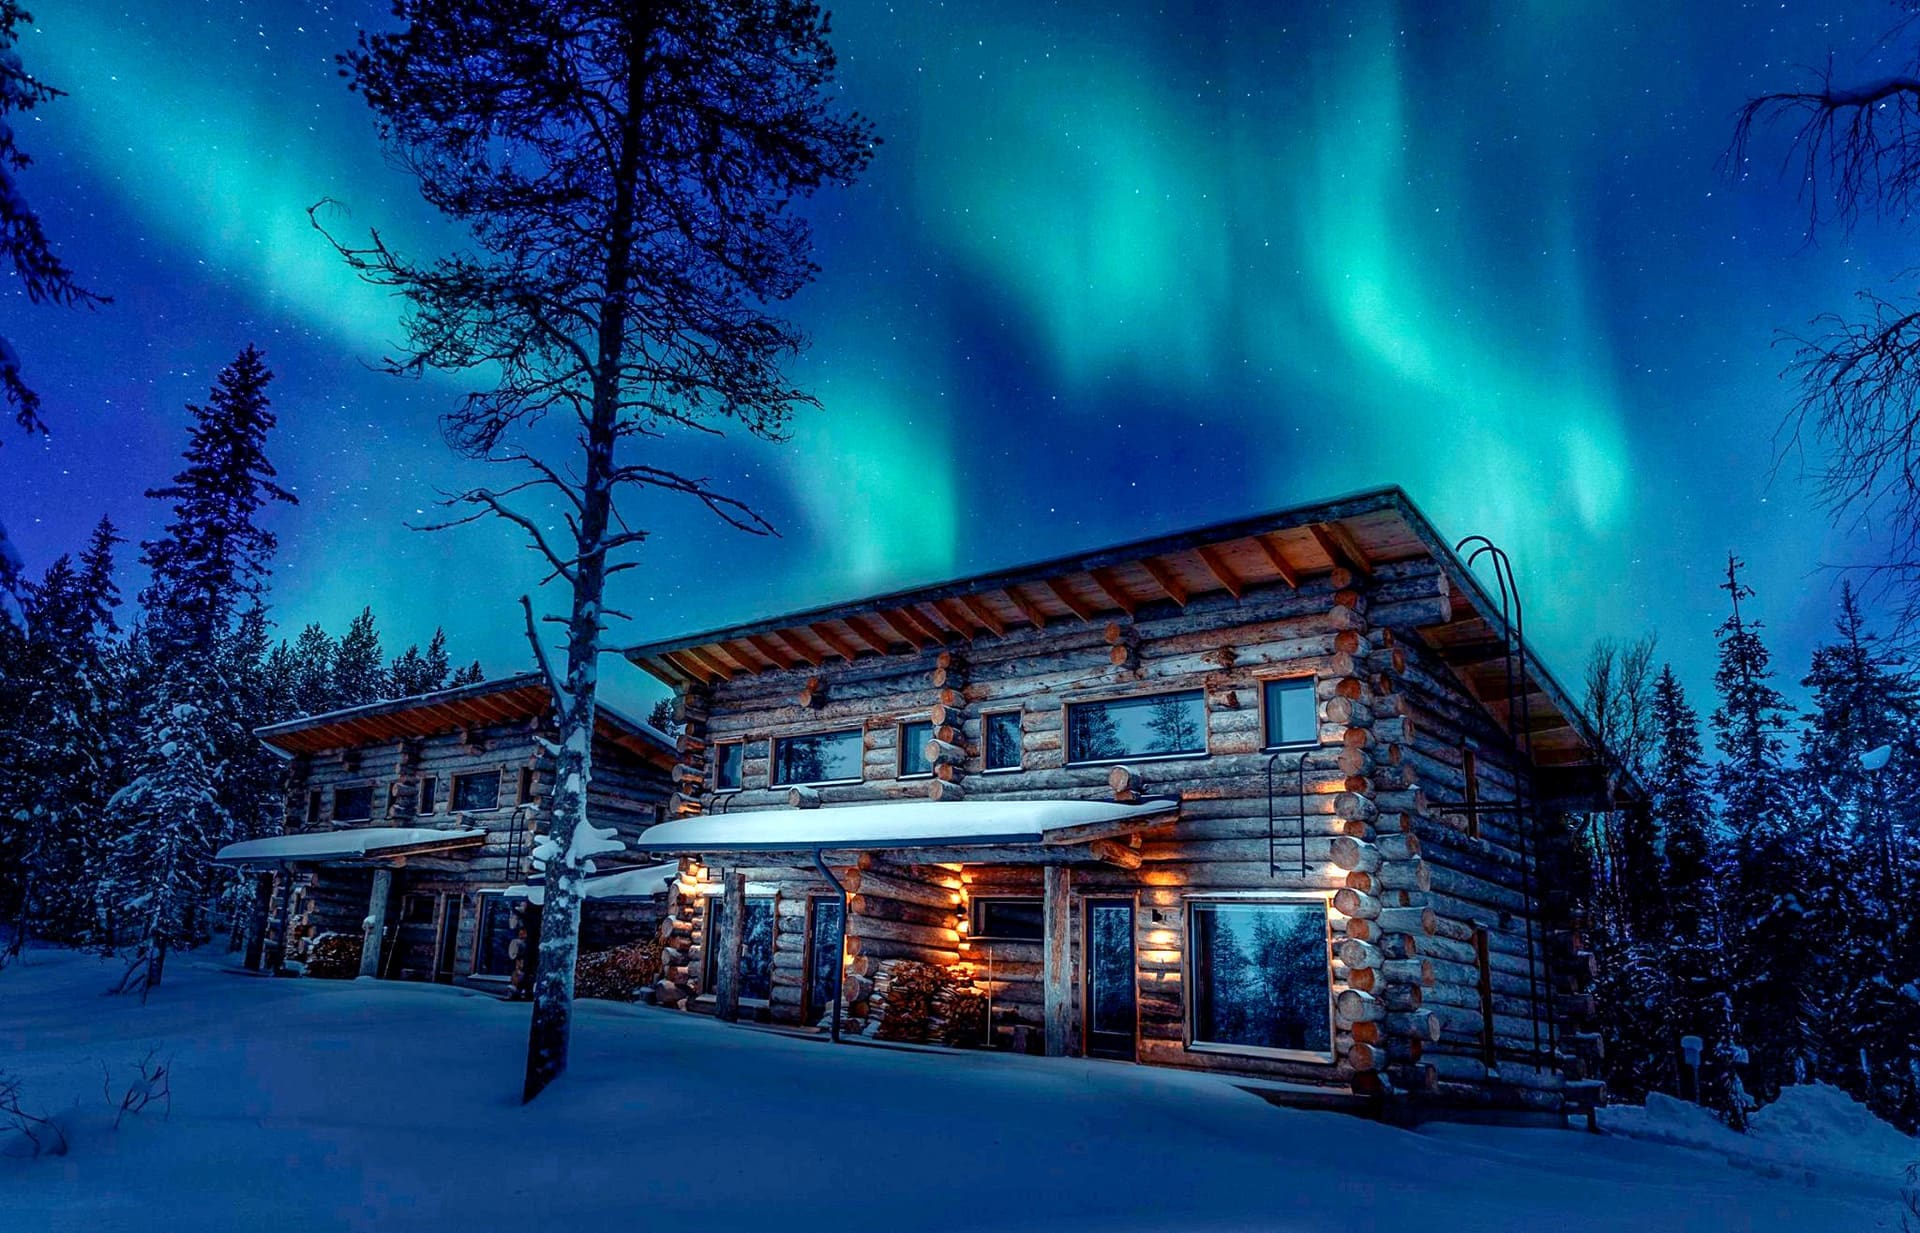 Exterior Rukan Villas aurora borealis in the sky